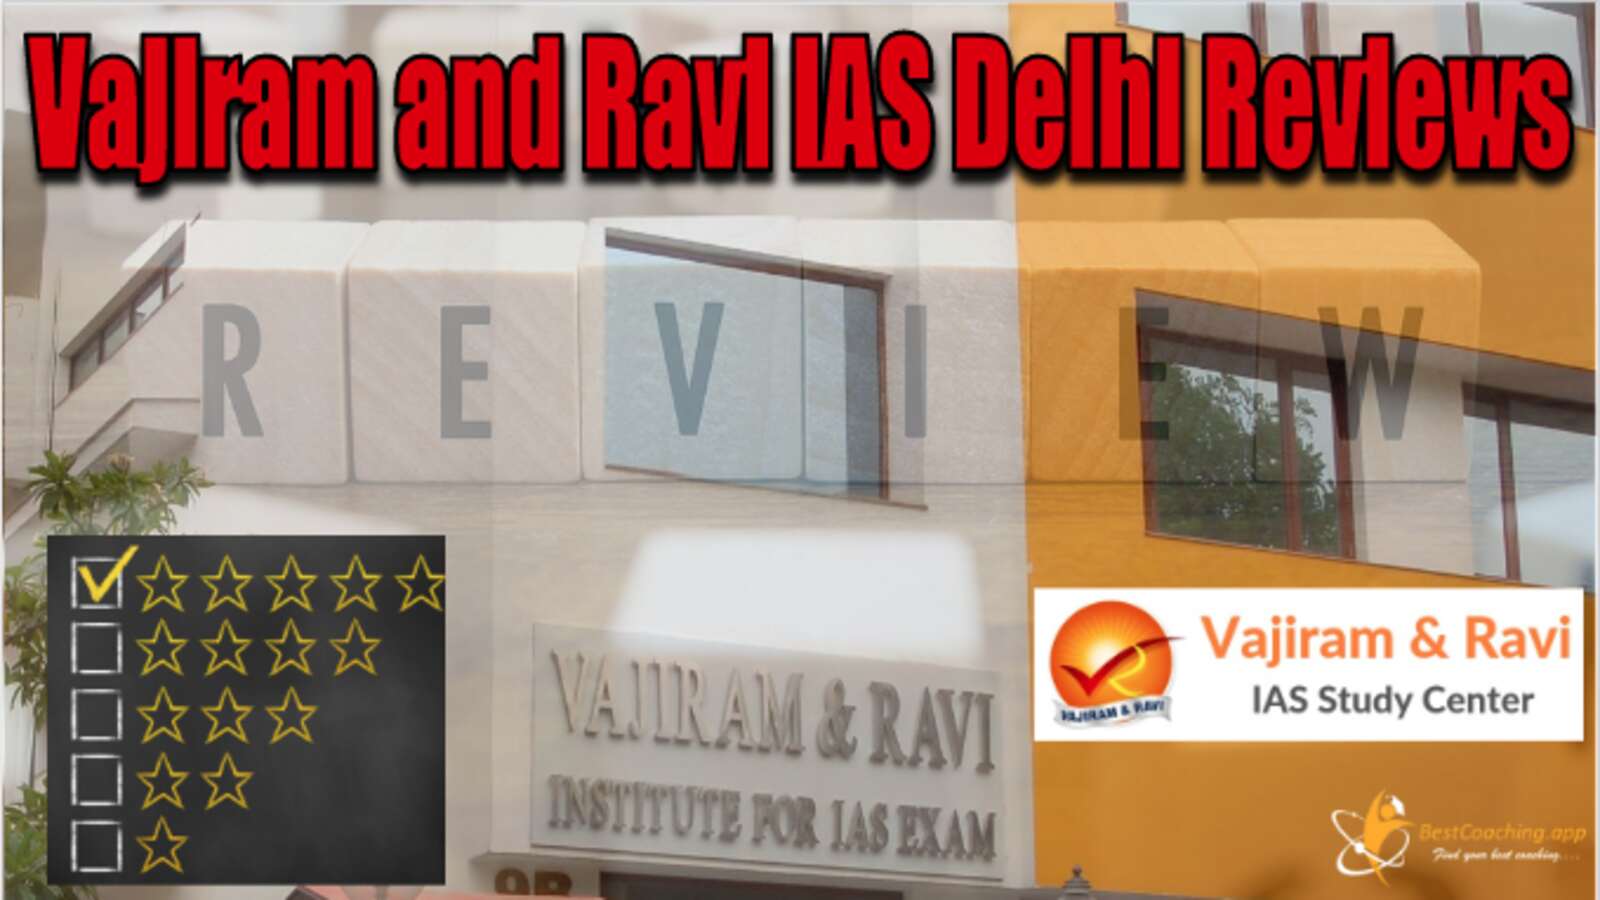 Vajiram and Ravi IAS Delhi Reviews